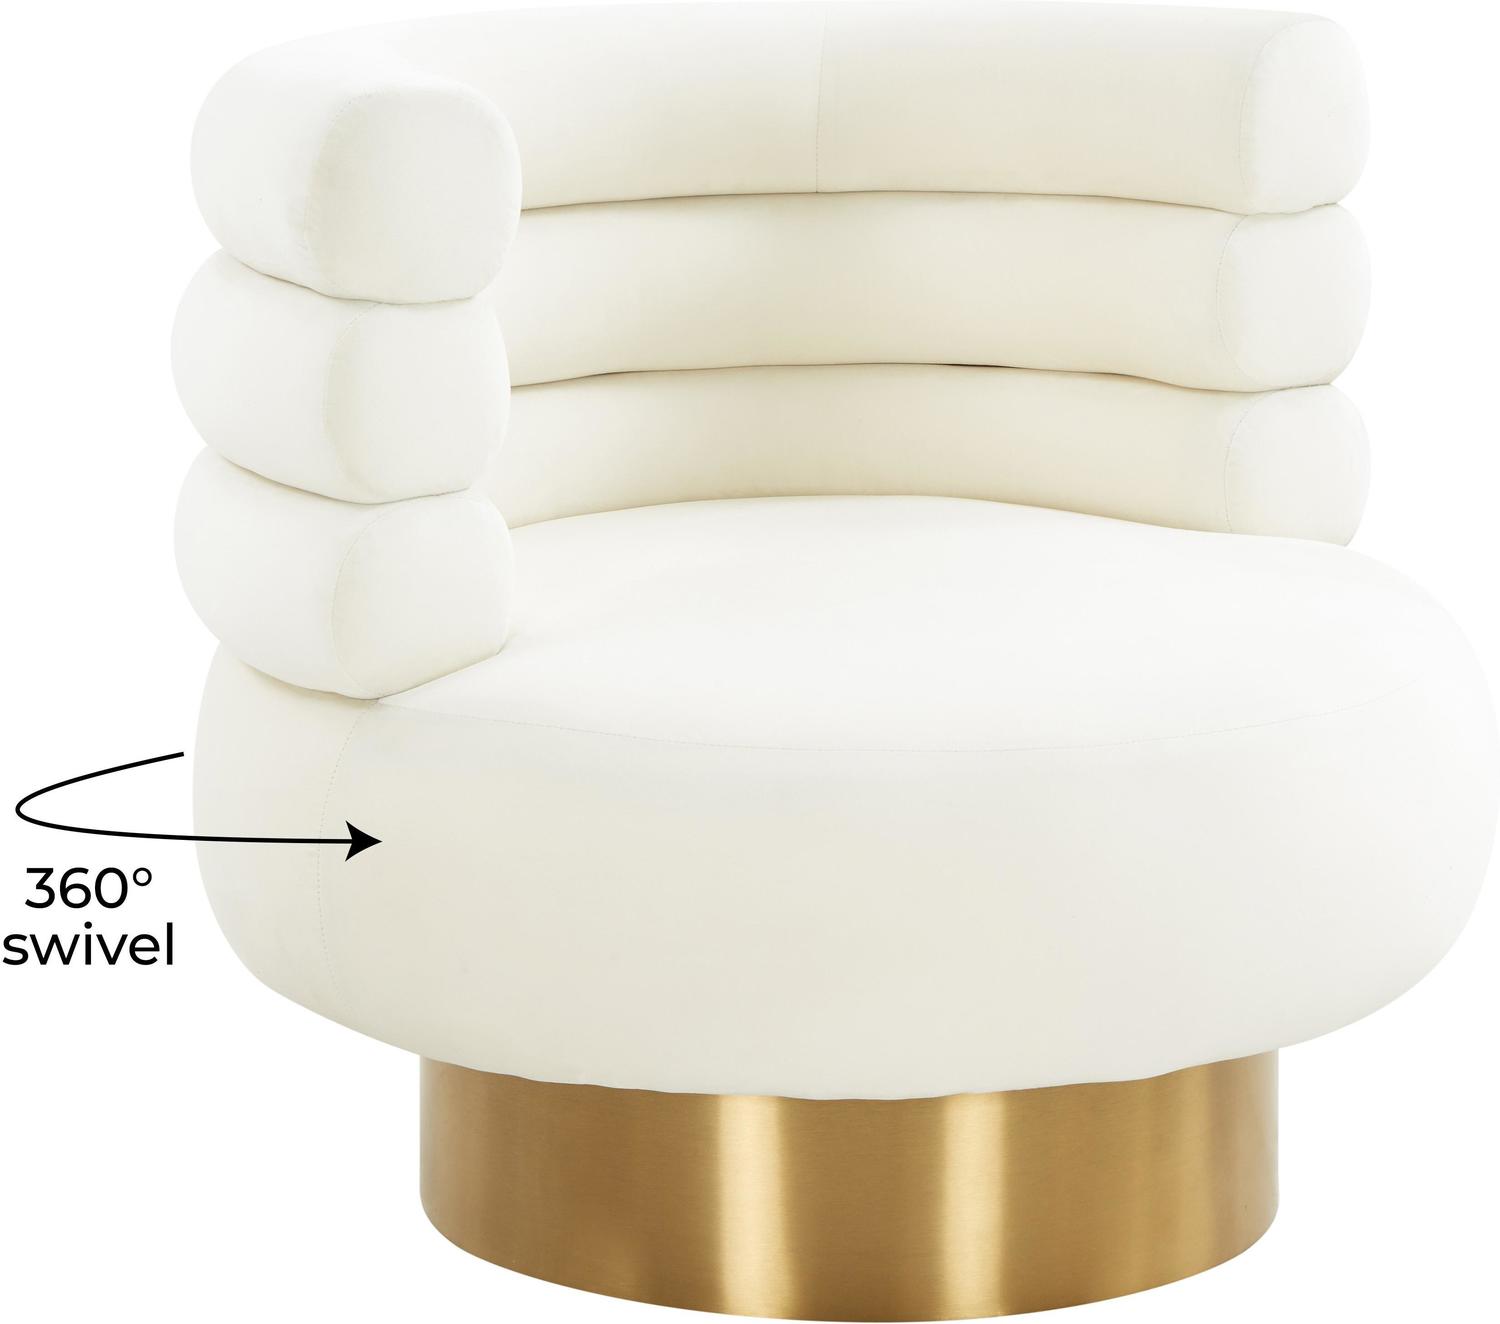 orange living room chair Contemporary Design Furniture Accent Chairs Cream